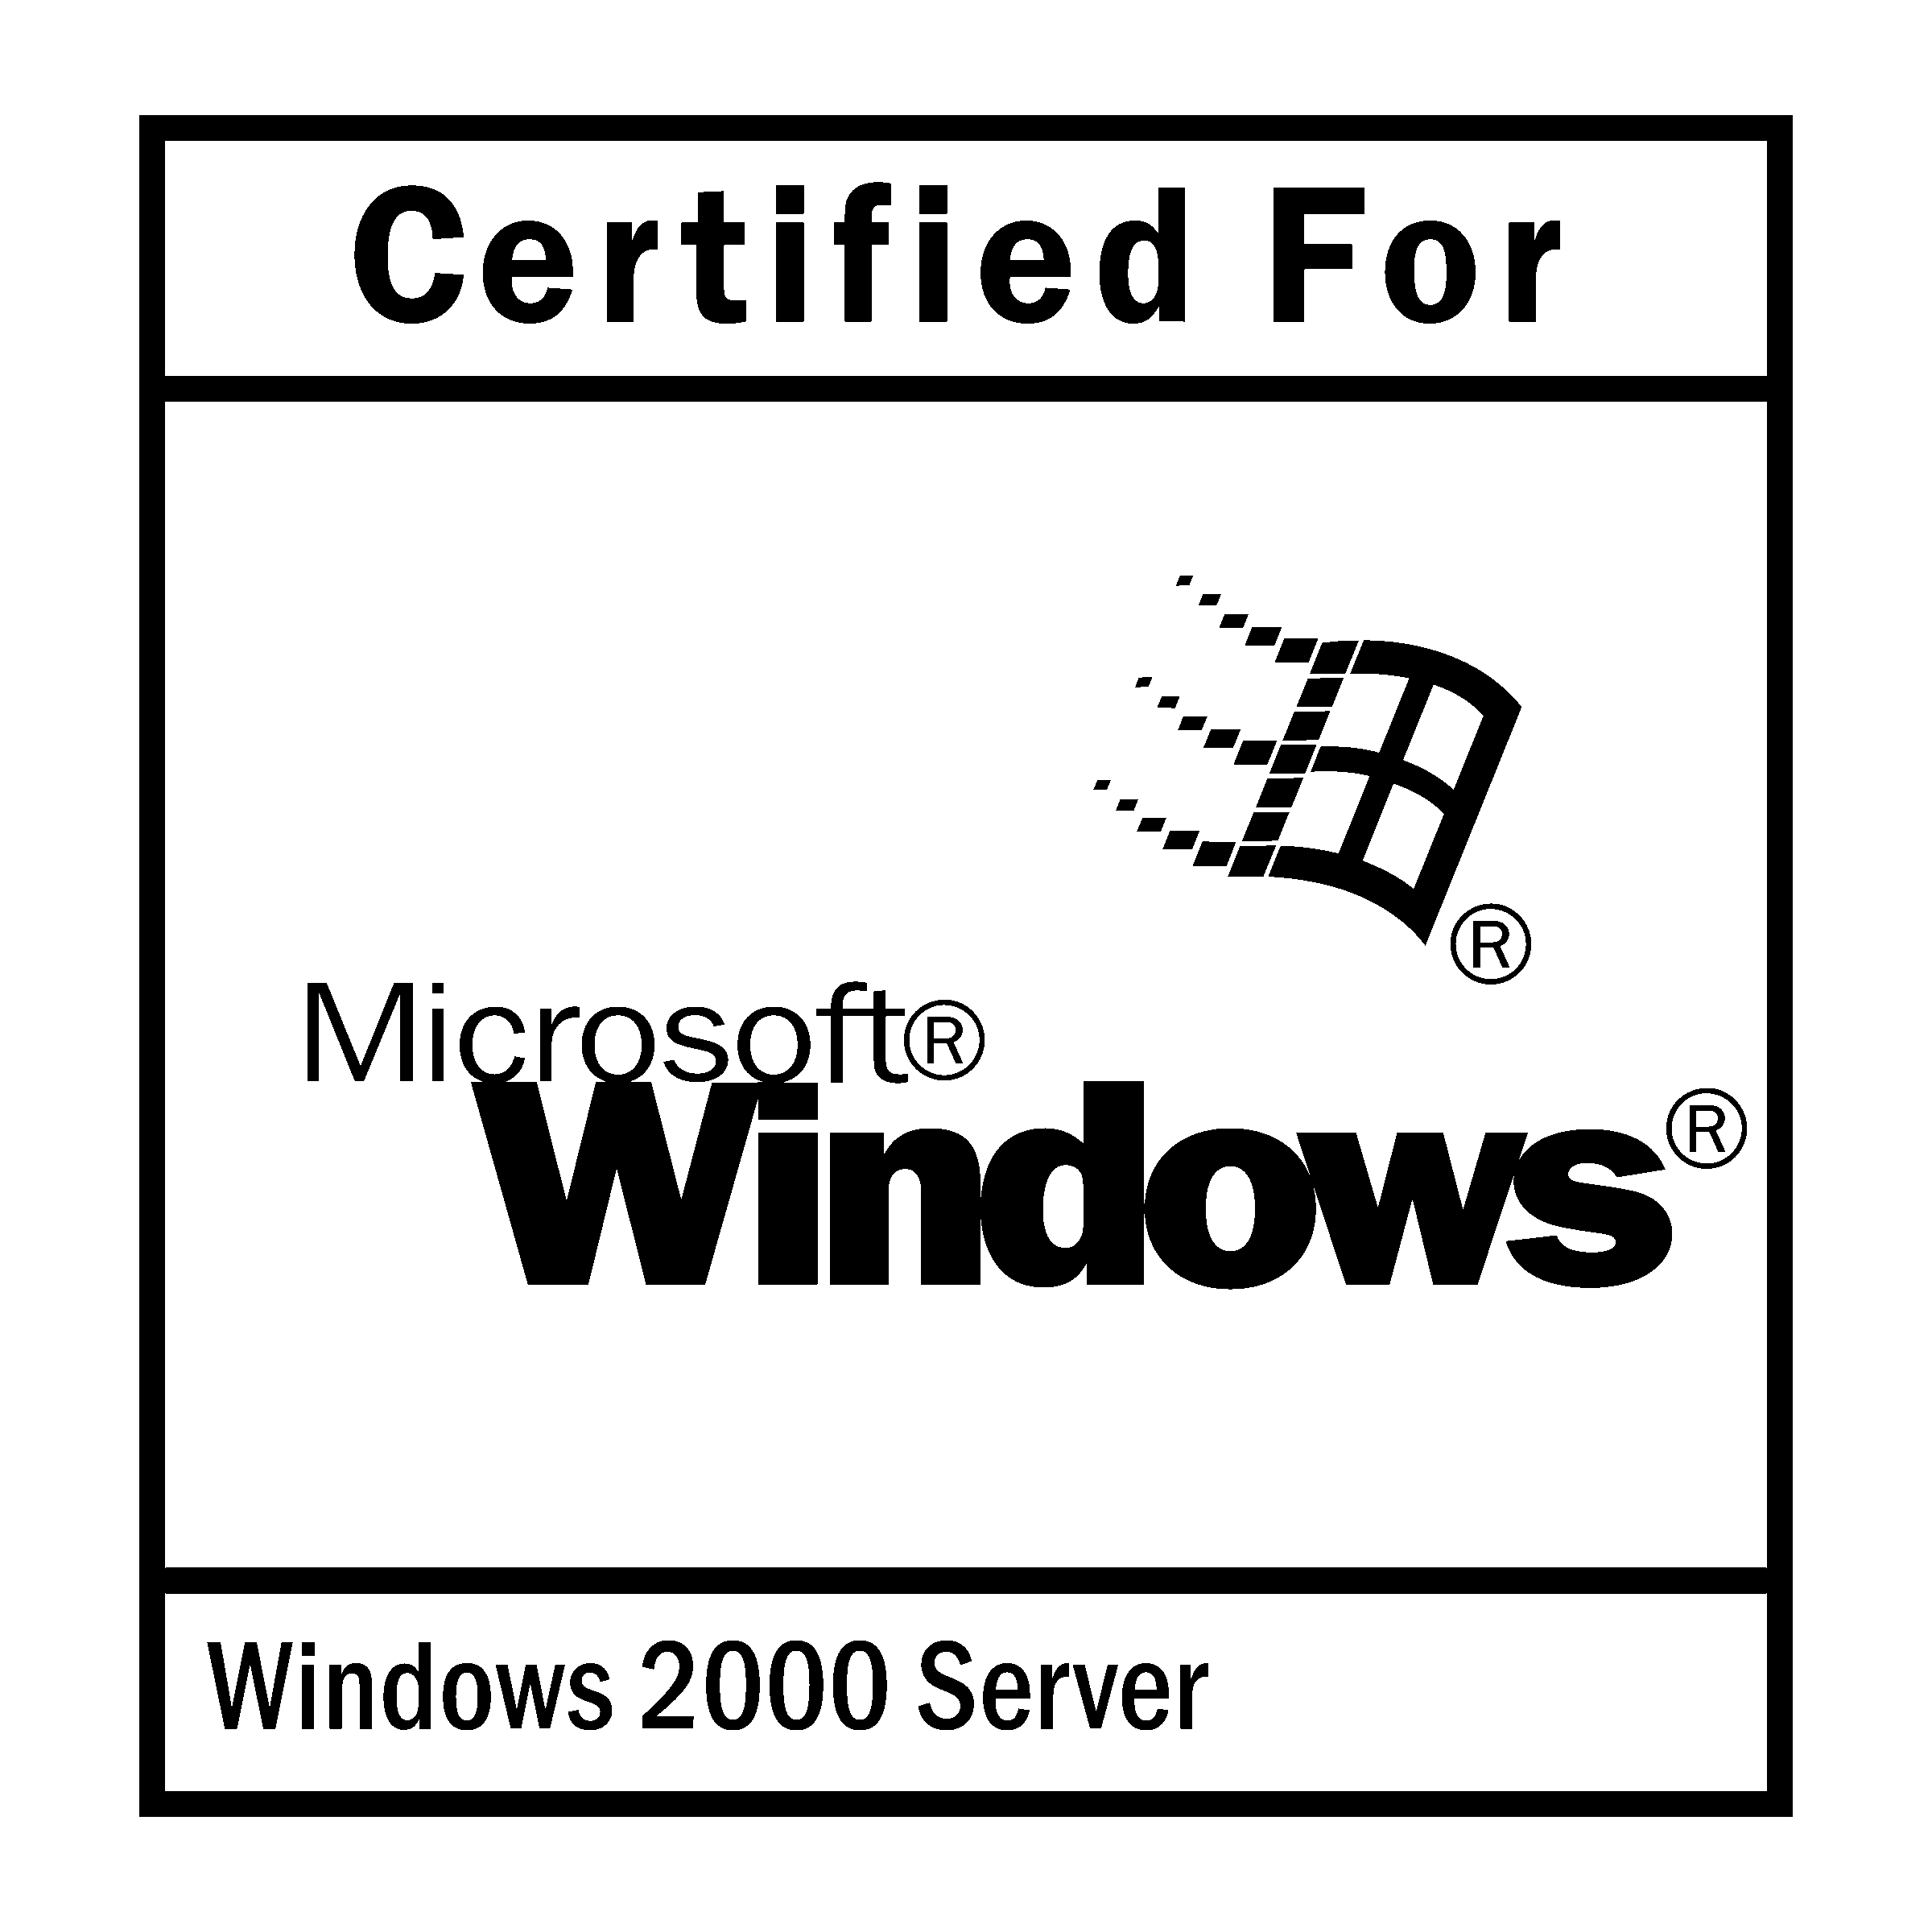 Microsoft Windows 2000 Logo - Microsoft Windows 2000 Server Logo PNG Transparent & SVG Vector ...